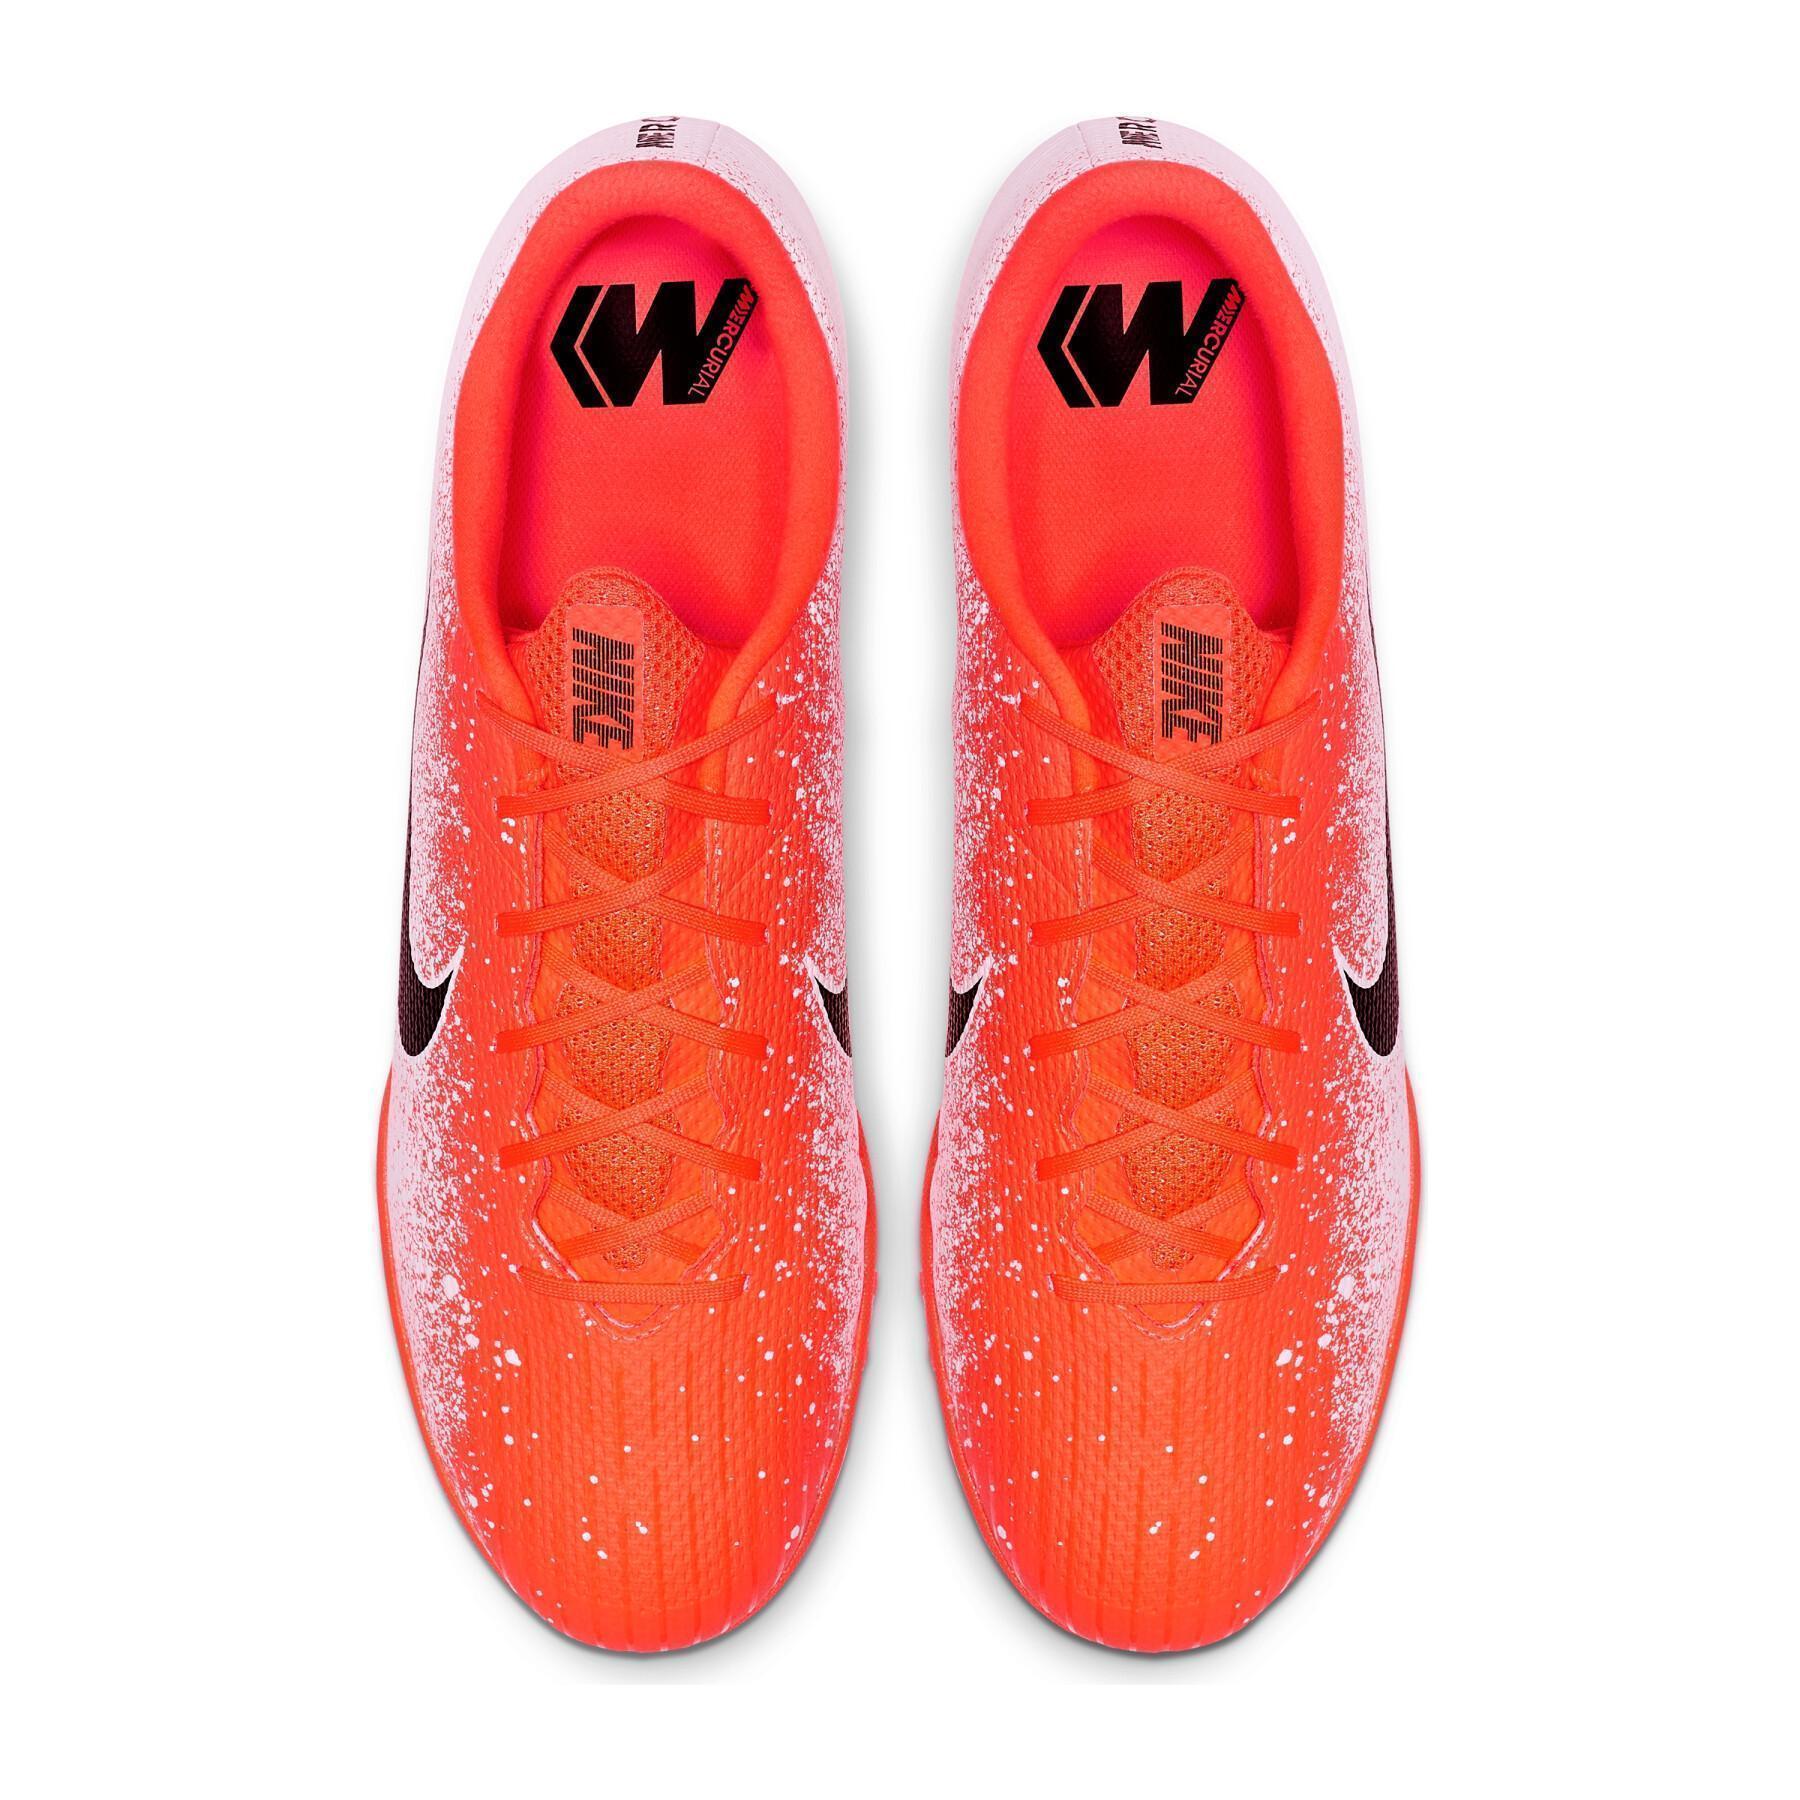 Chaussures de football Nike Mercurial Vapor X 12 Academy TF